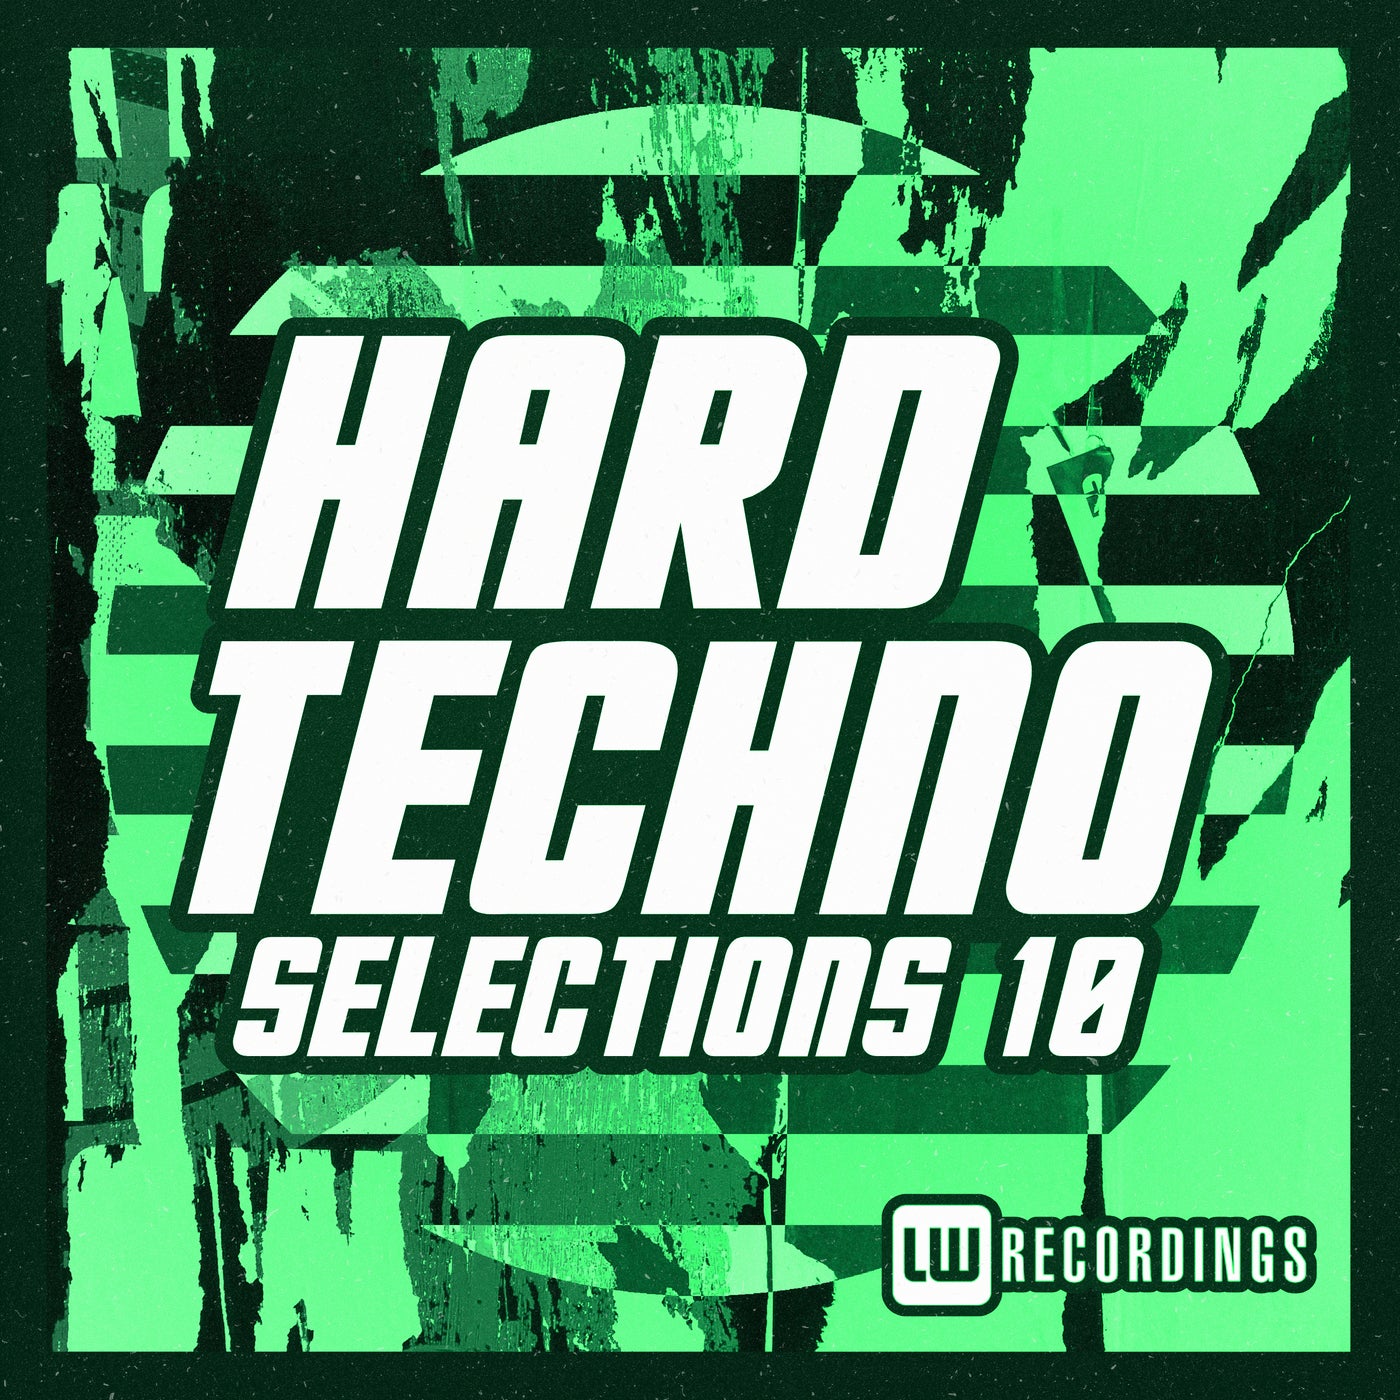 Hard Techno Selections, Vol. 10